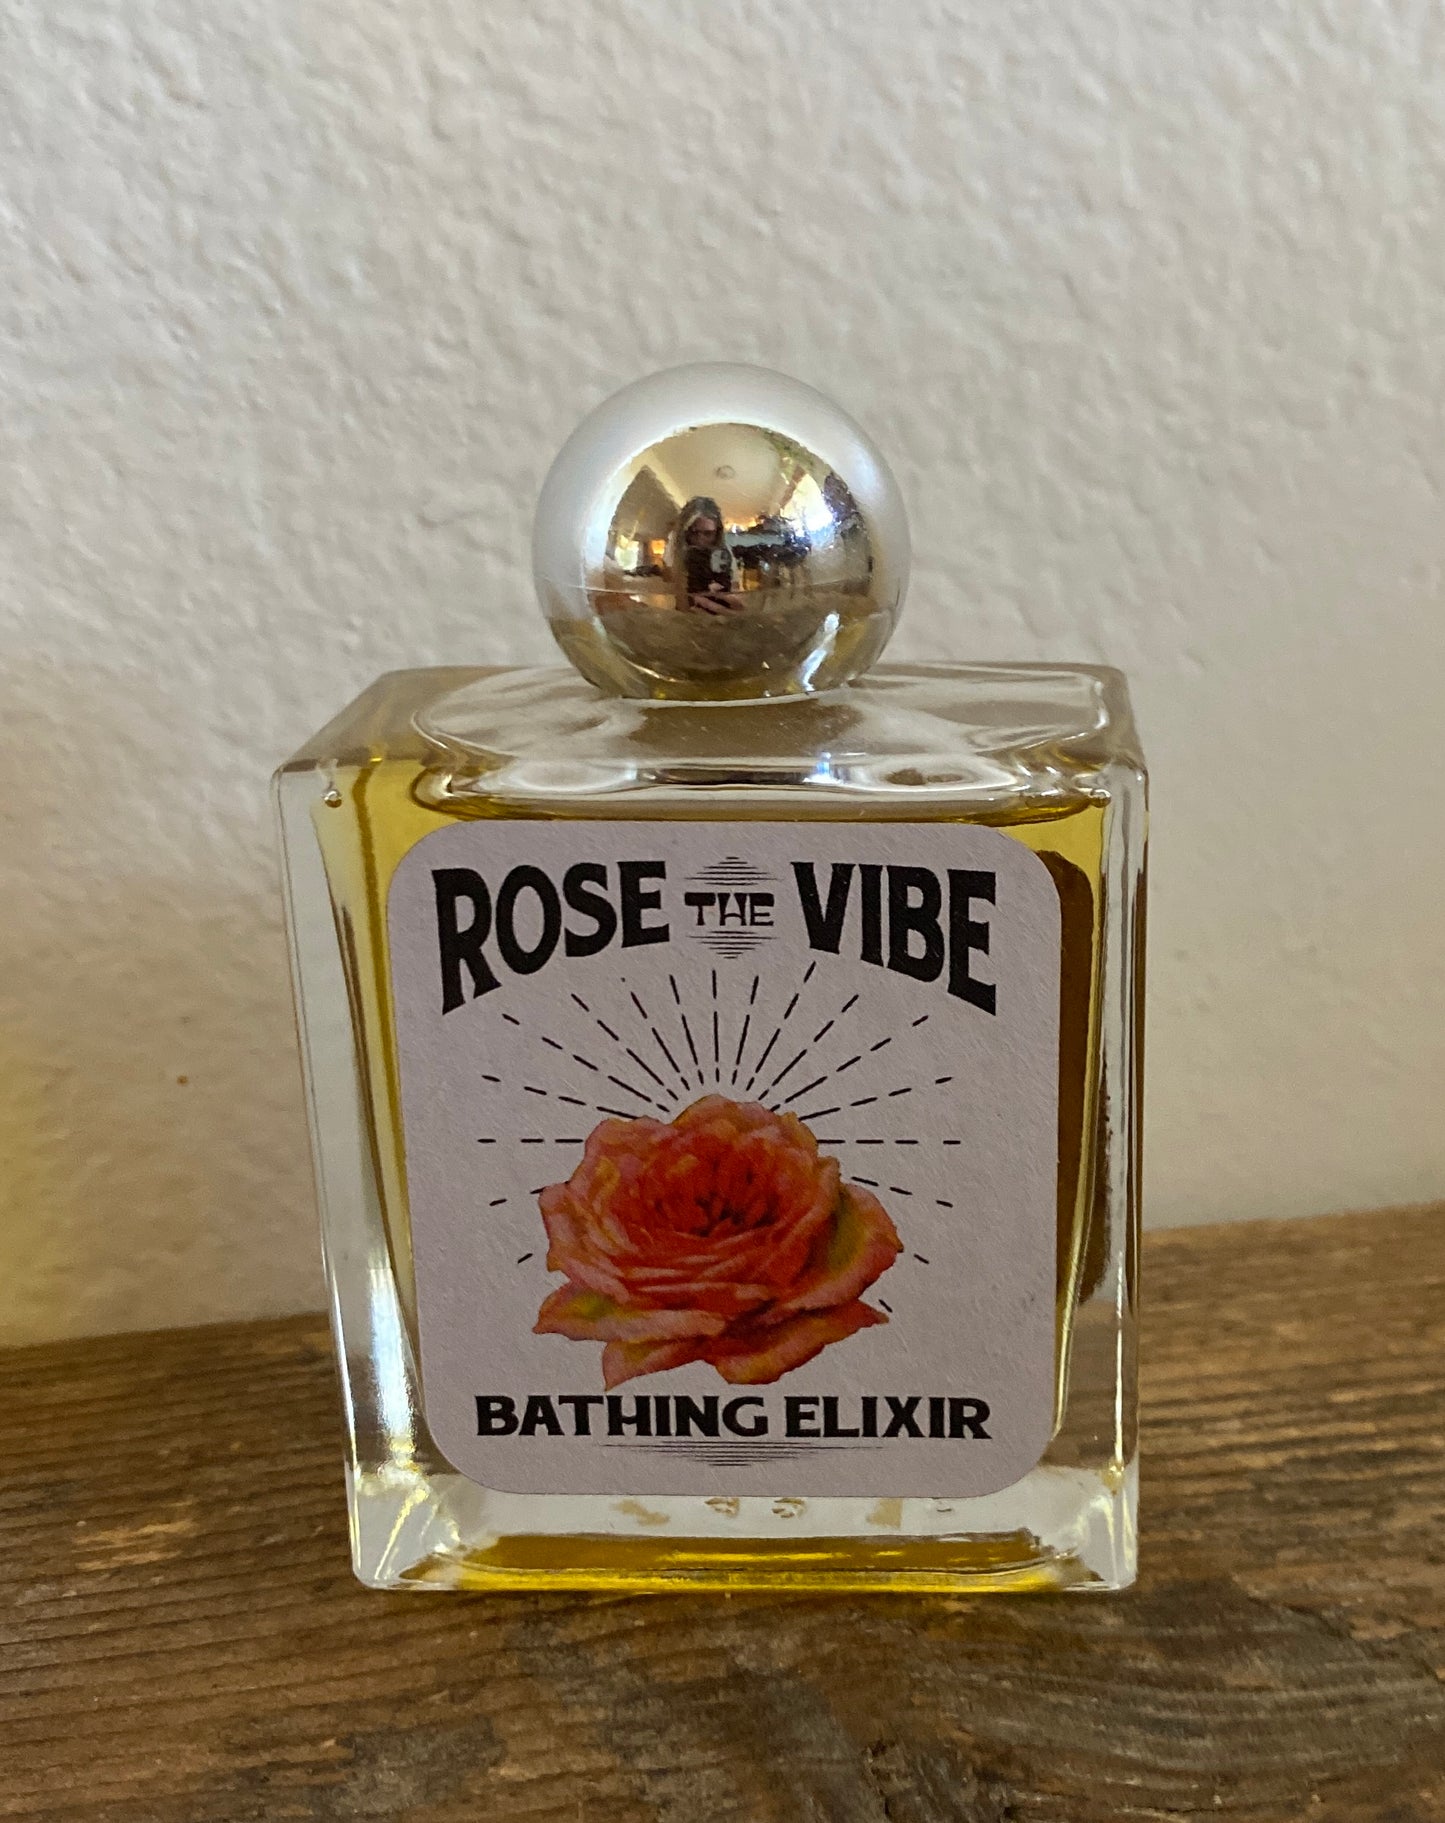 Rose the Vibe Bathing Elixir